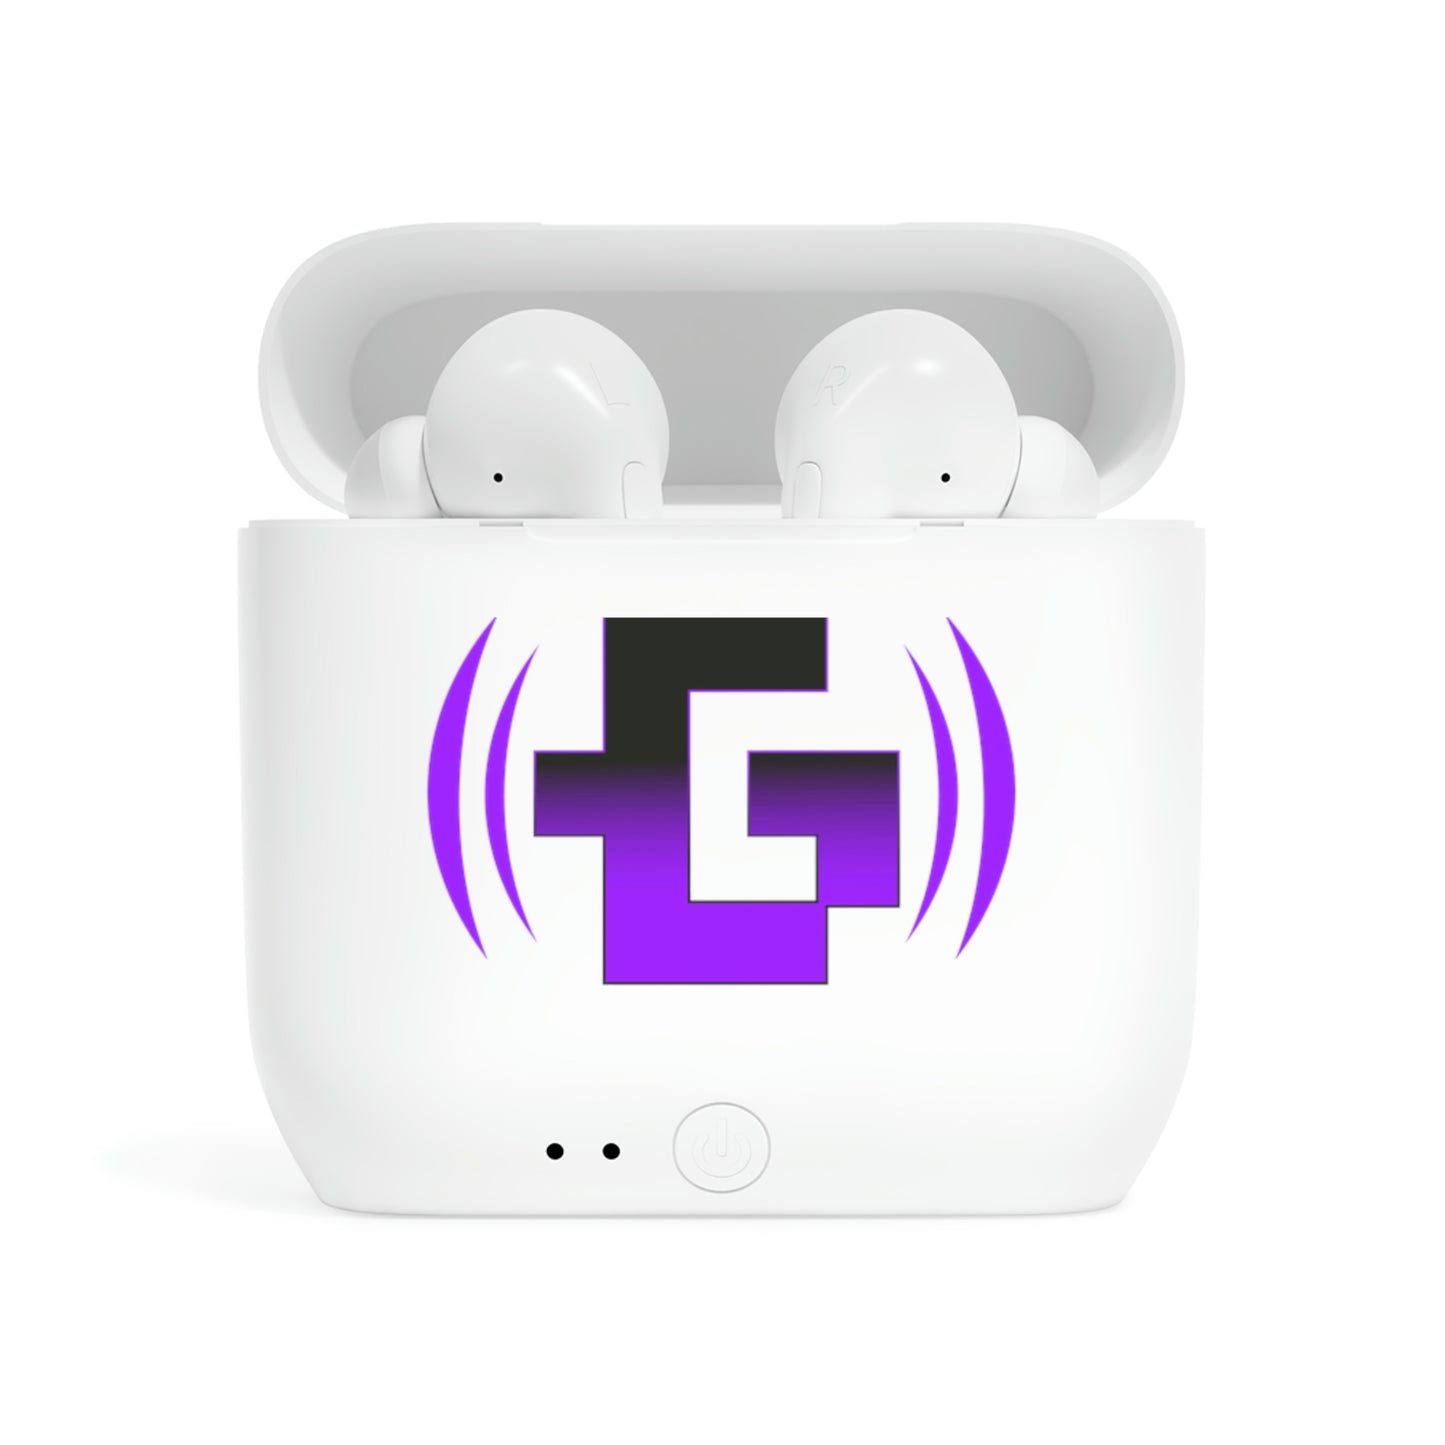 Wireless "G" Earbuds